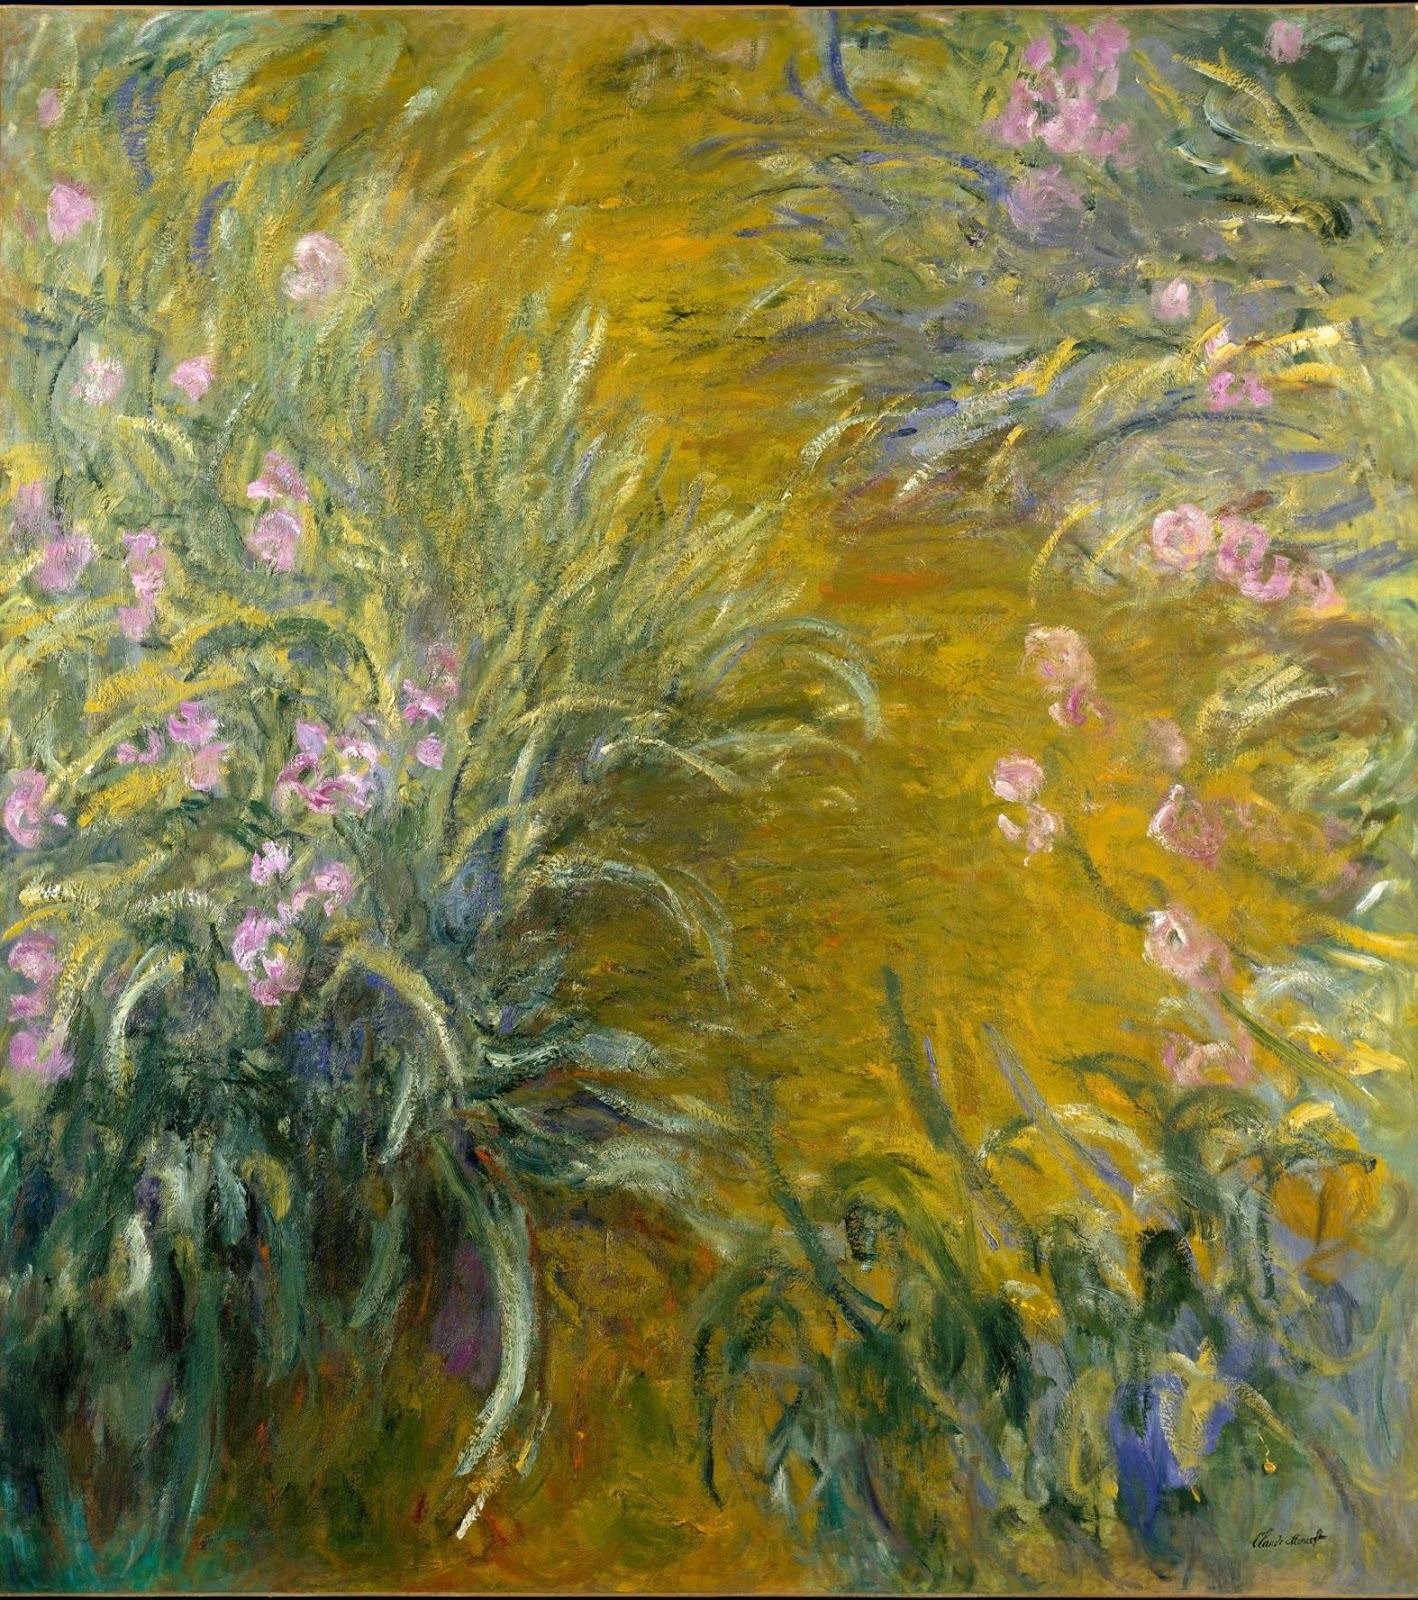 Claude+Monet-1840-1926 (785).jpg